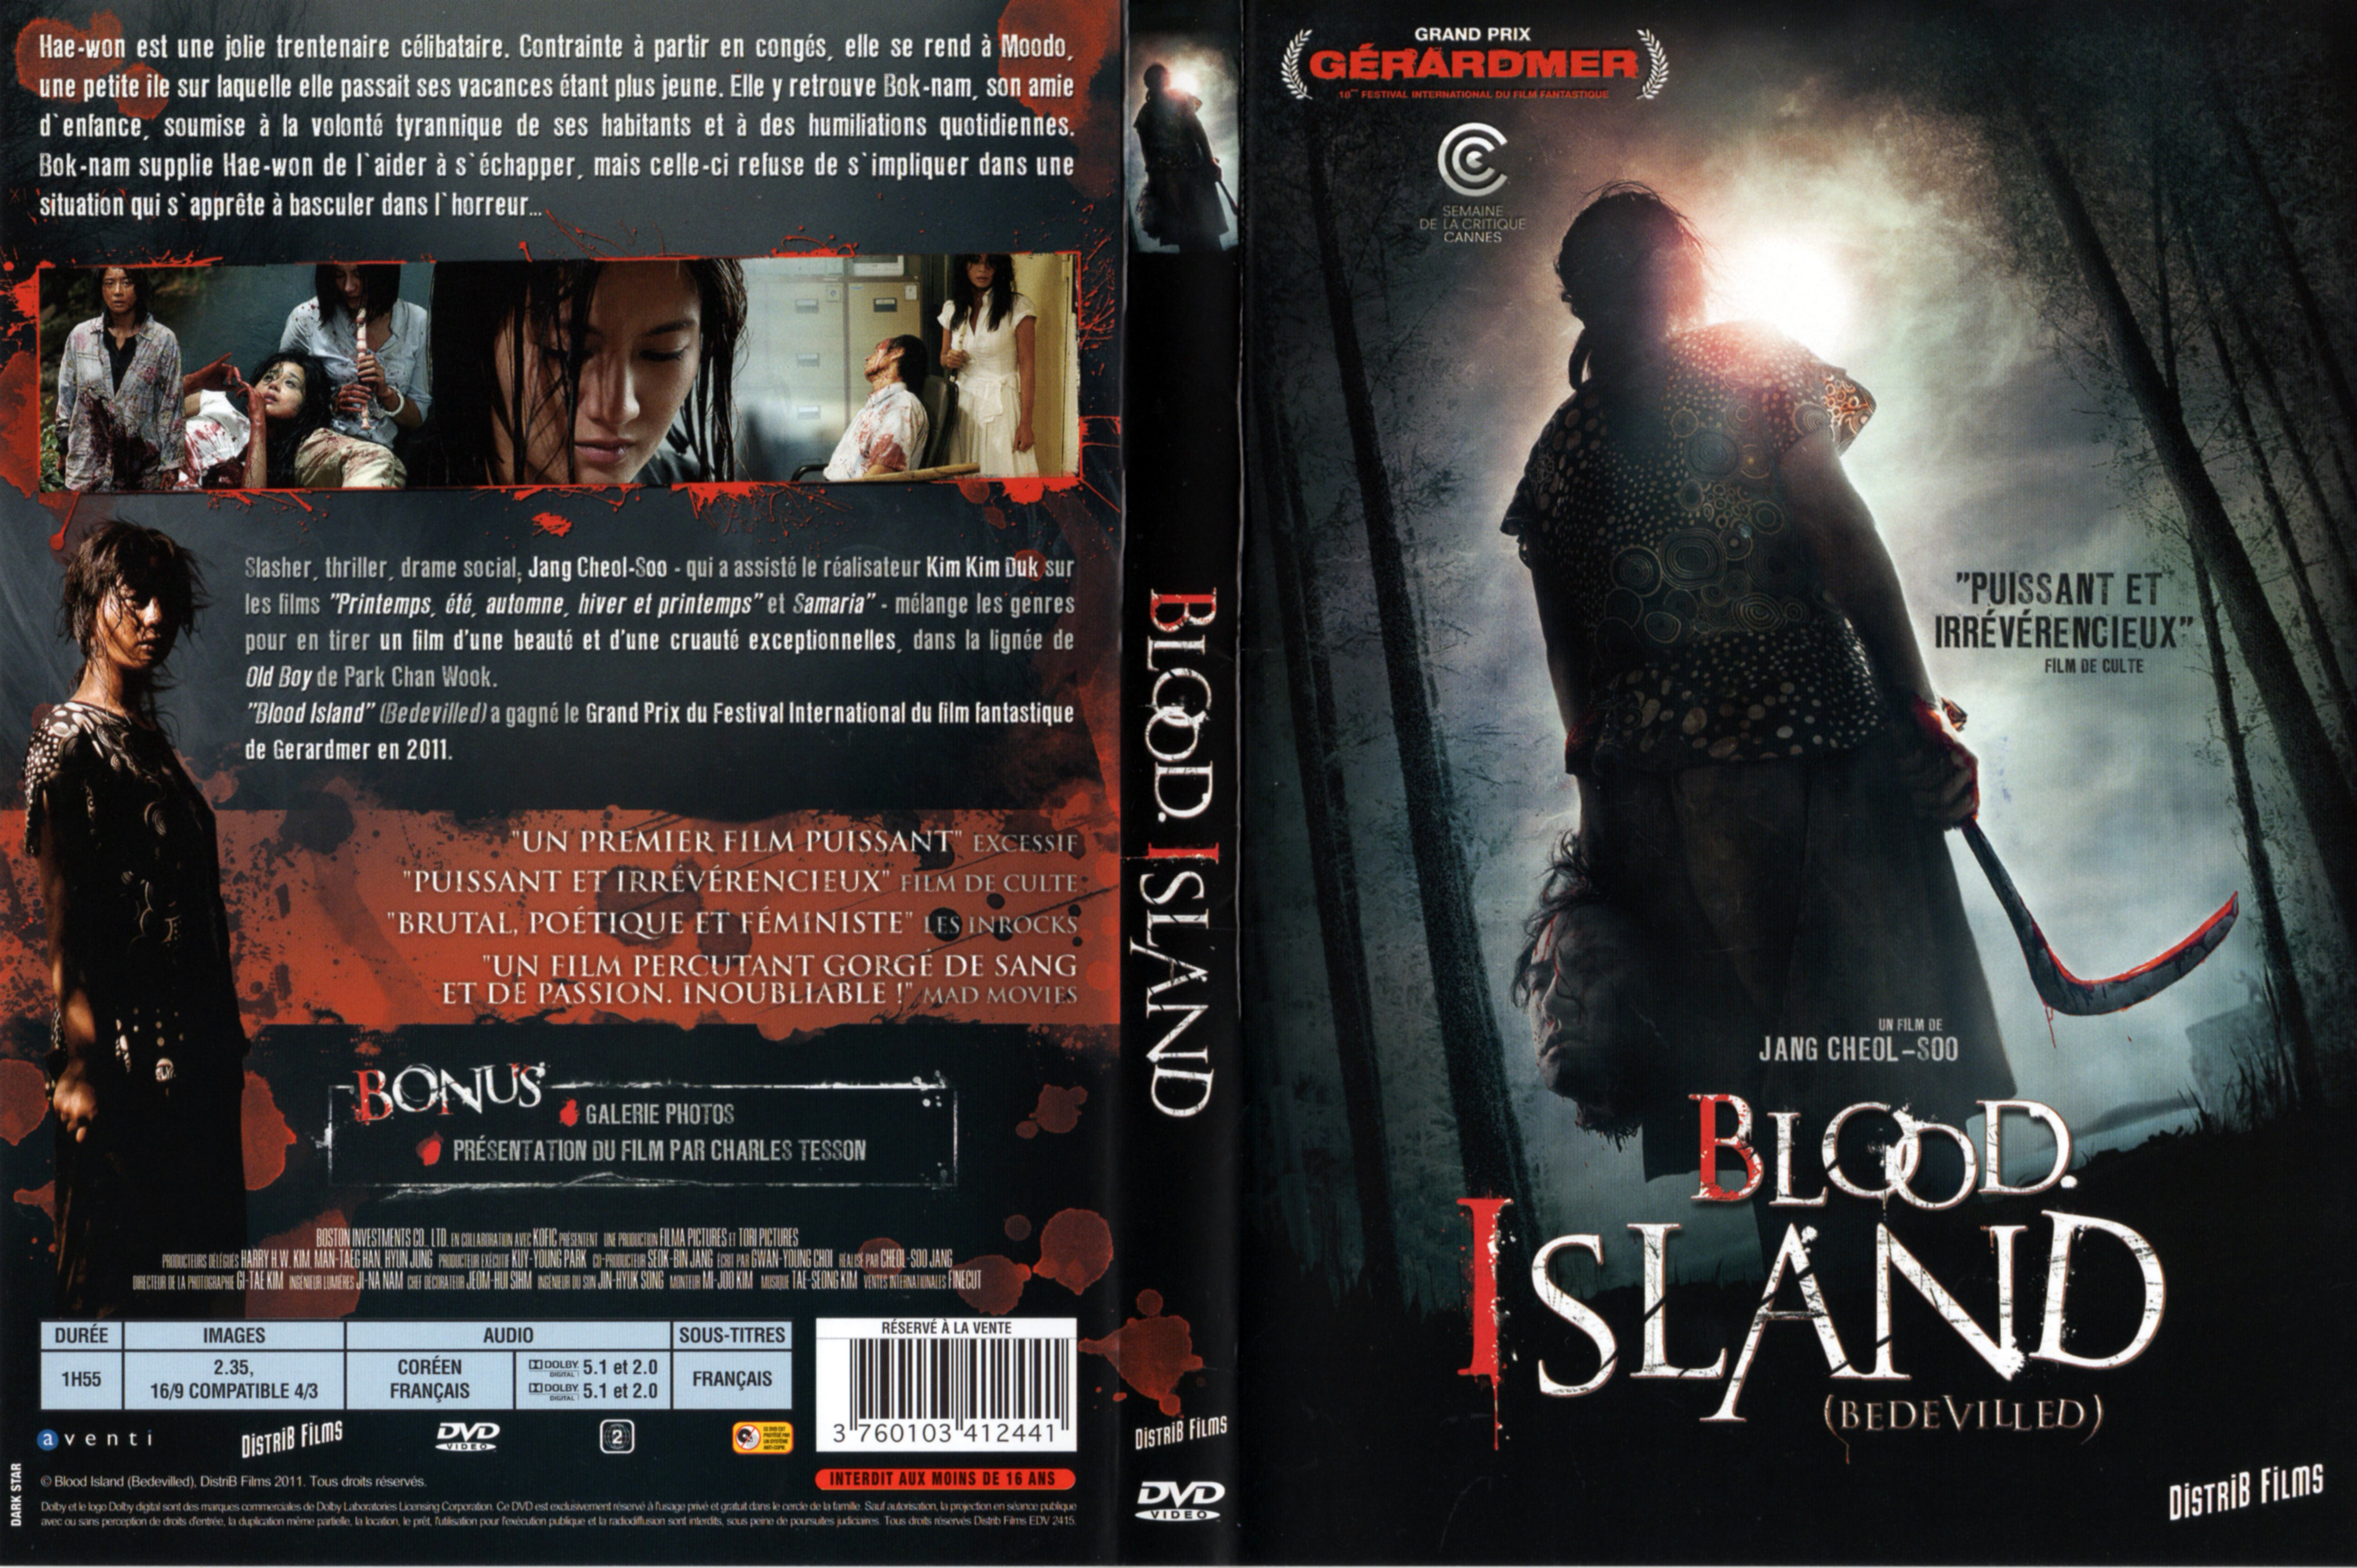 Jaquette DVD Blood island